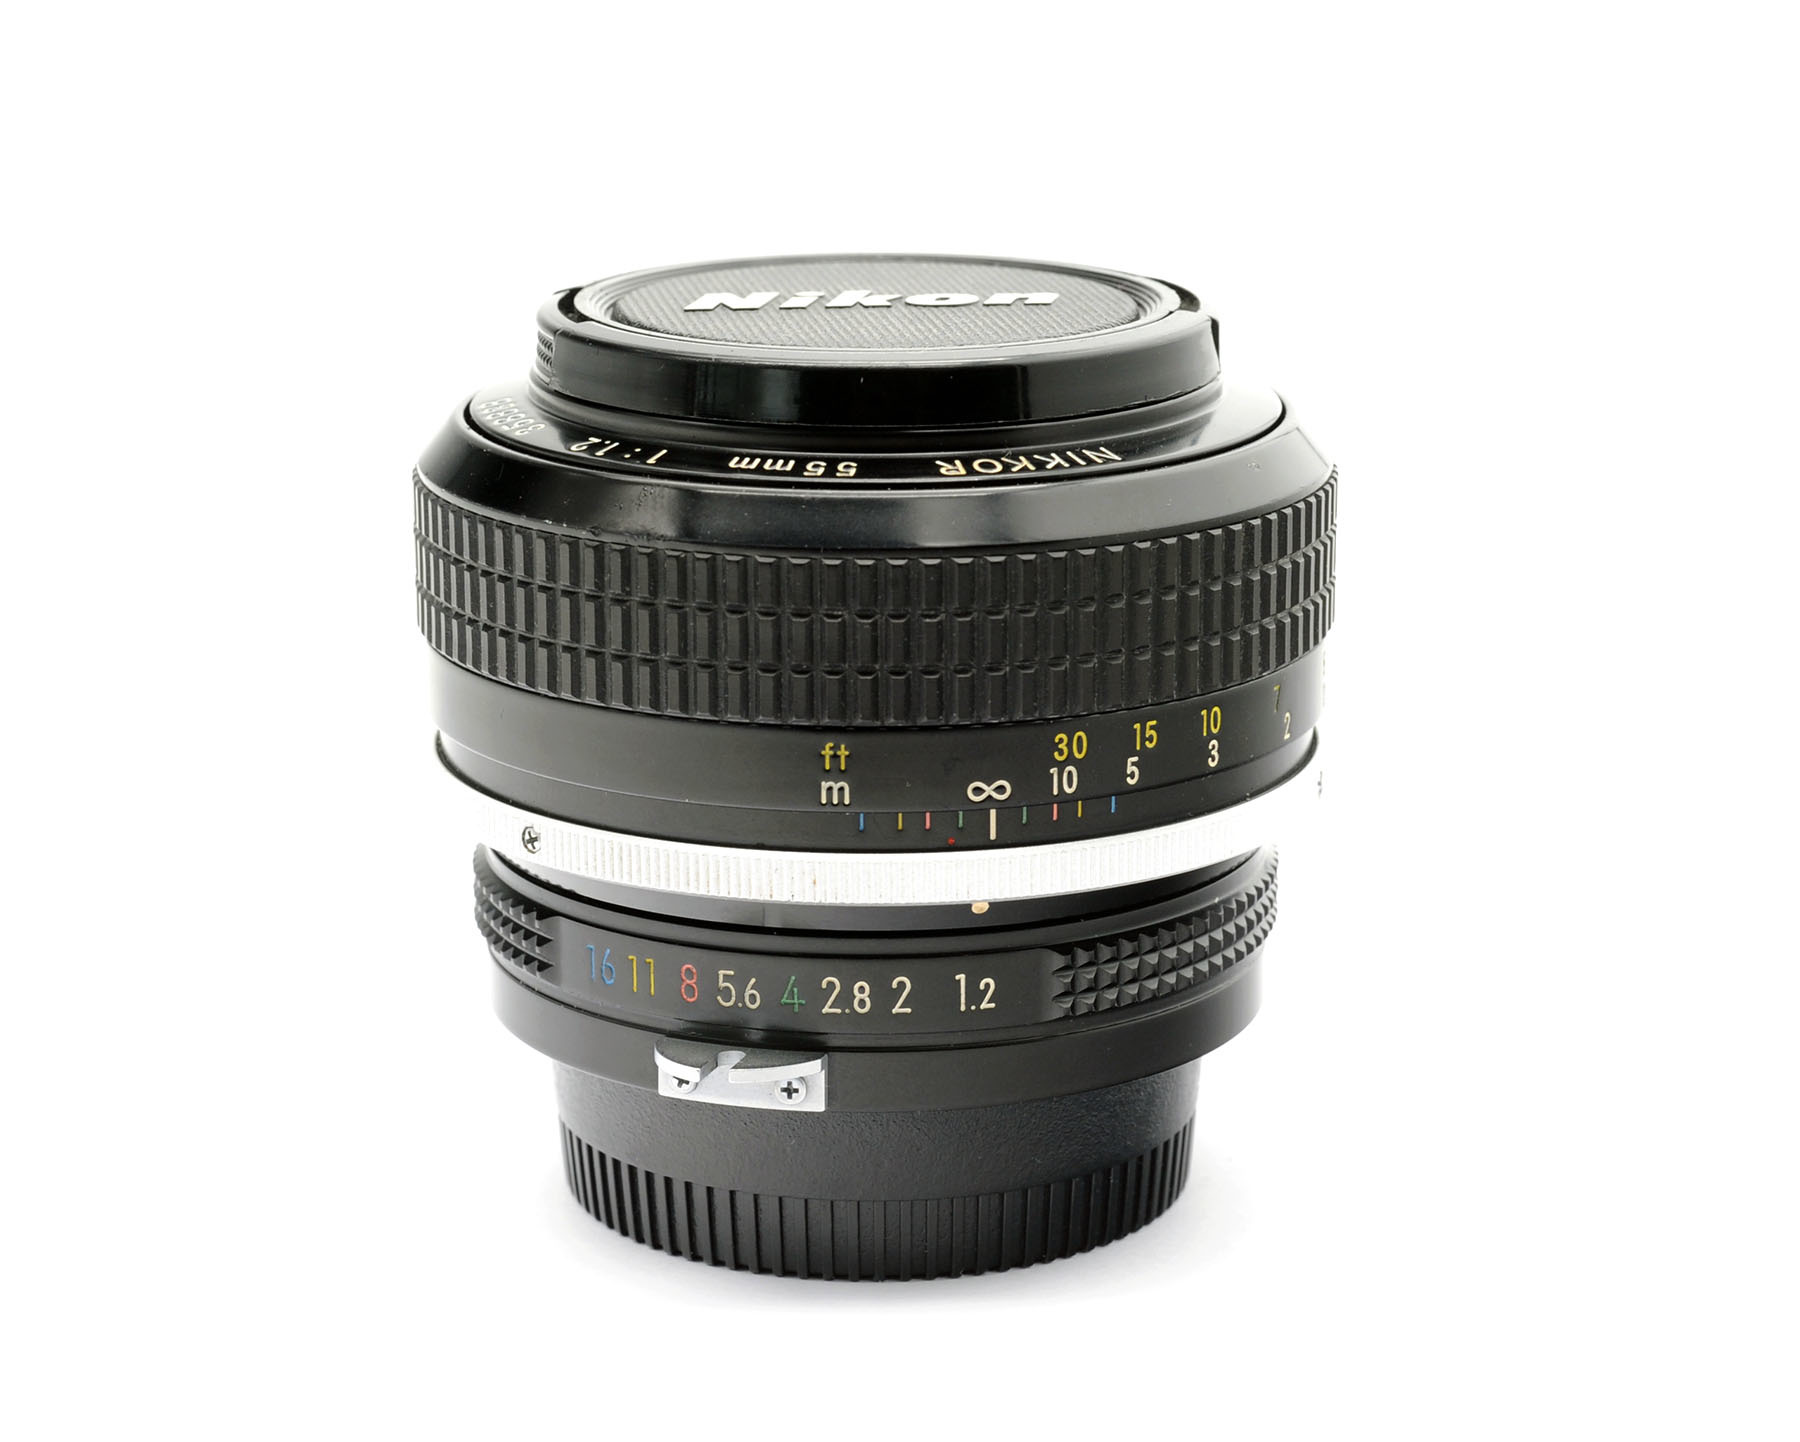 Nikon 55mm f1.2 (Pre-AI) A2110102 - Aperture UK